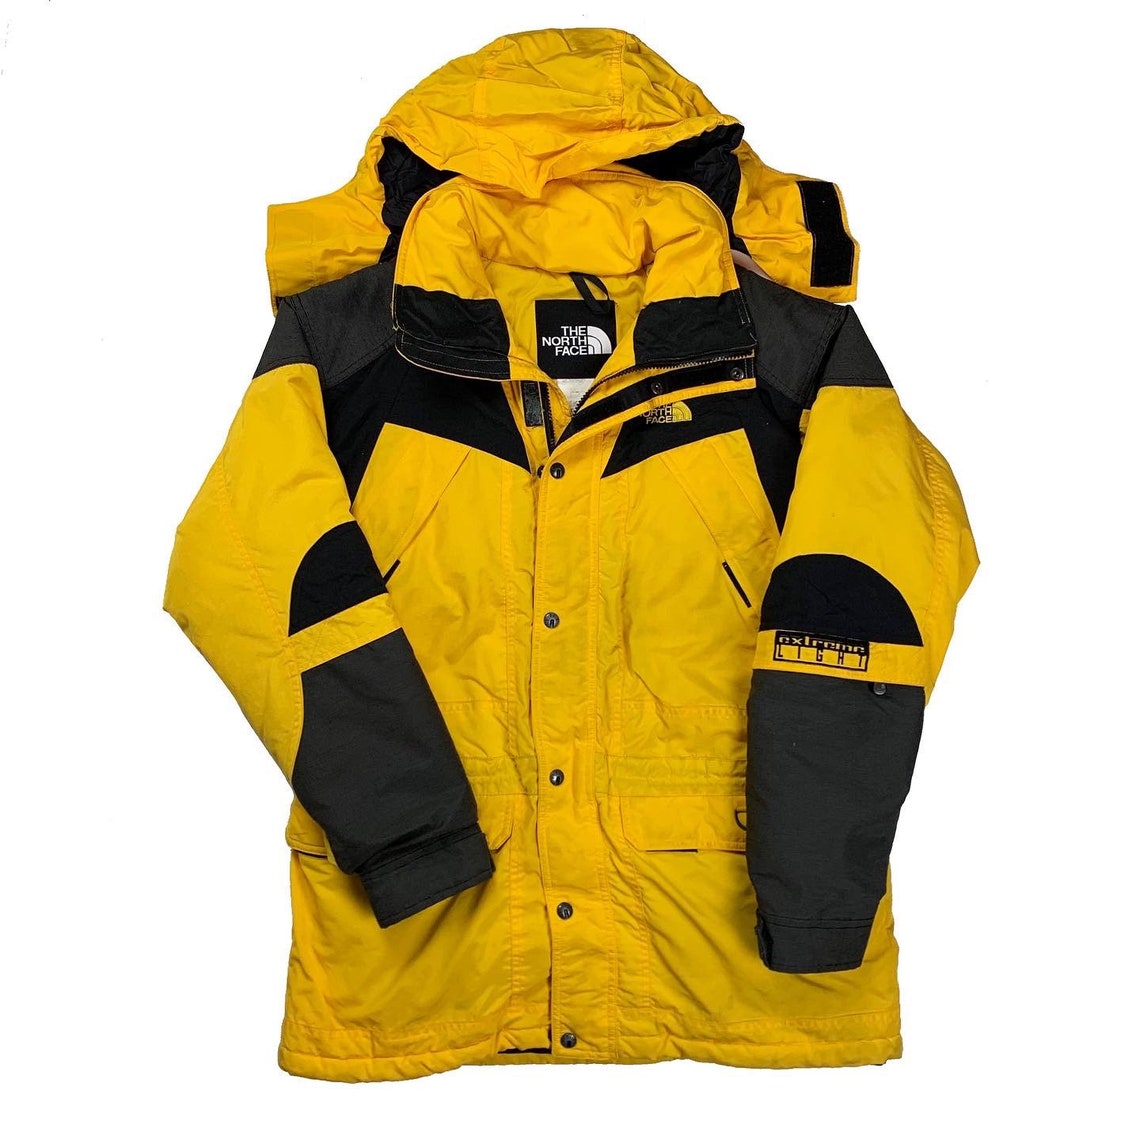 Vintage 90s North Face Extreme Light Jacket Yellow Black | Etsy